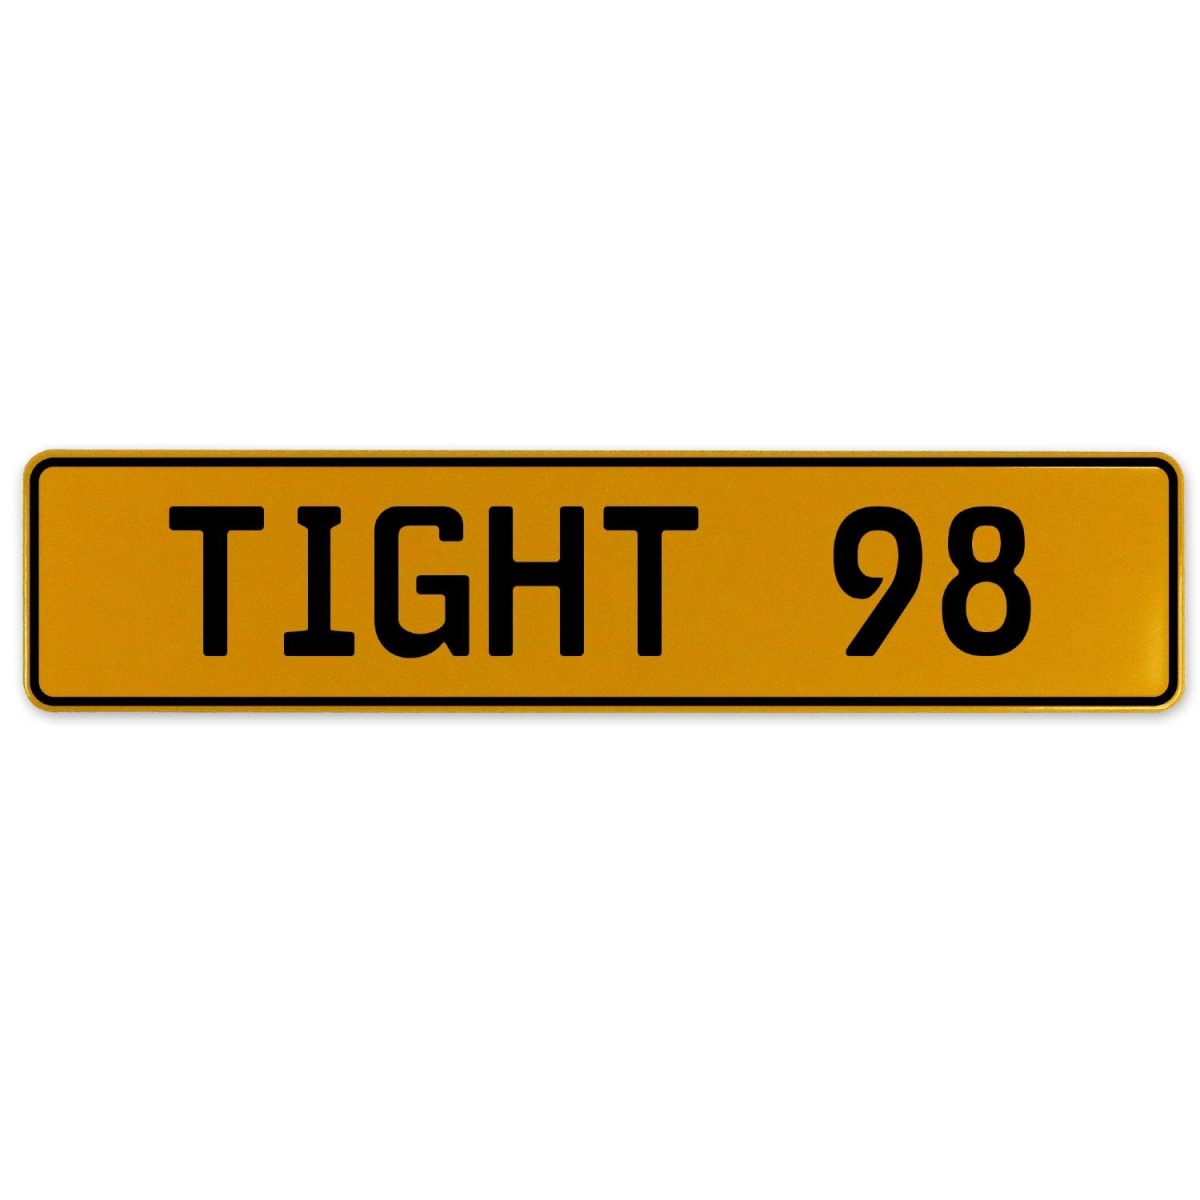 Tight 98 - Yellow Aluminum Street Sign Mancave Euro Plate Name Door Sign Wall